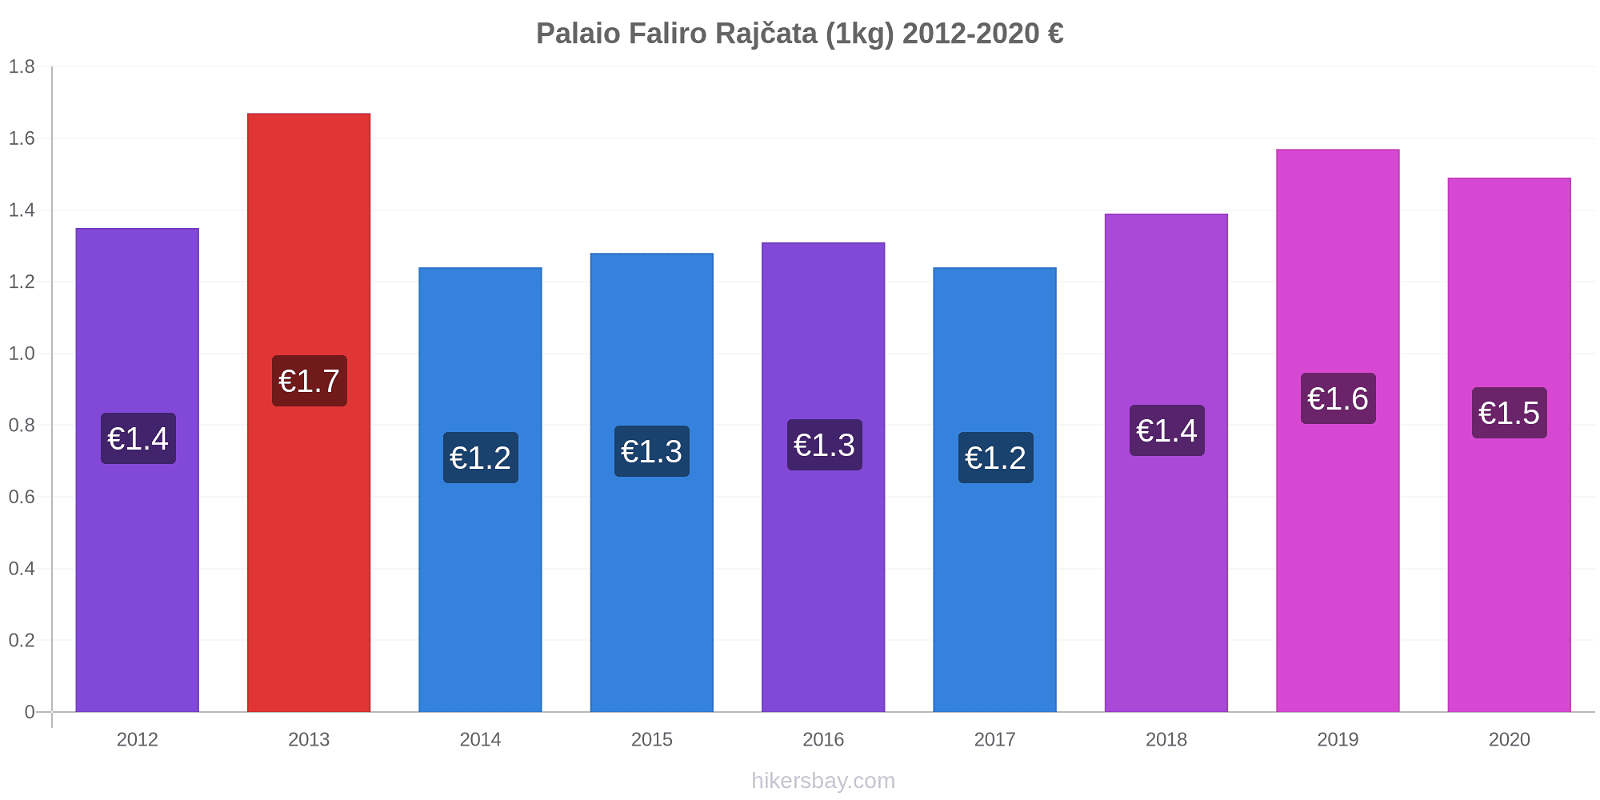 Palaio Faliro změny cen Rajčata (1kg) hikersbay.com